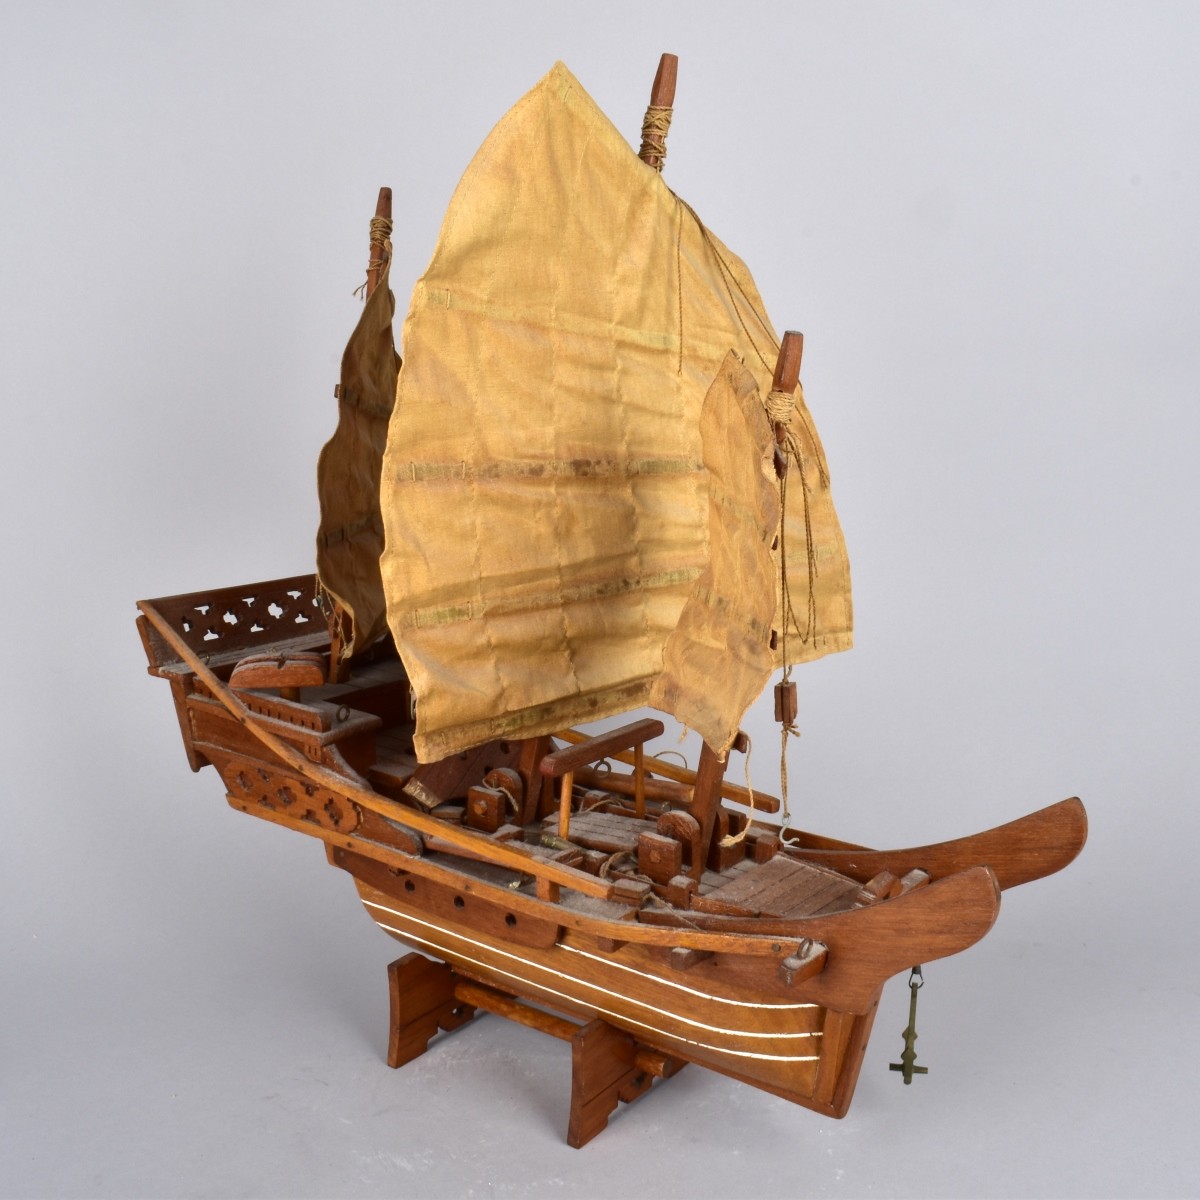 Vintage Model of a Galleon Ship